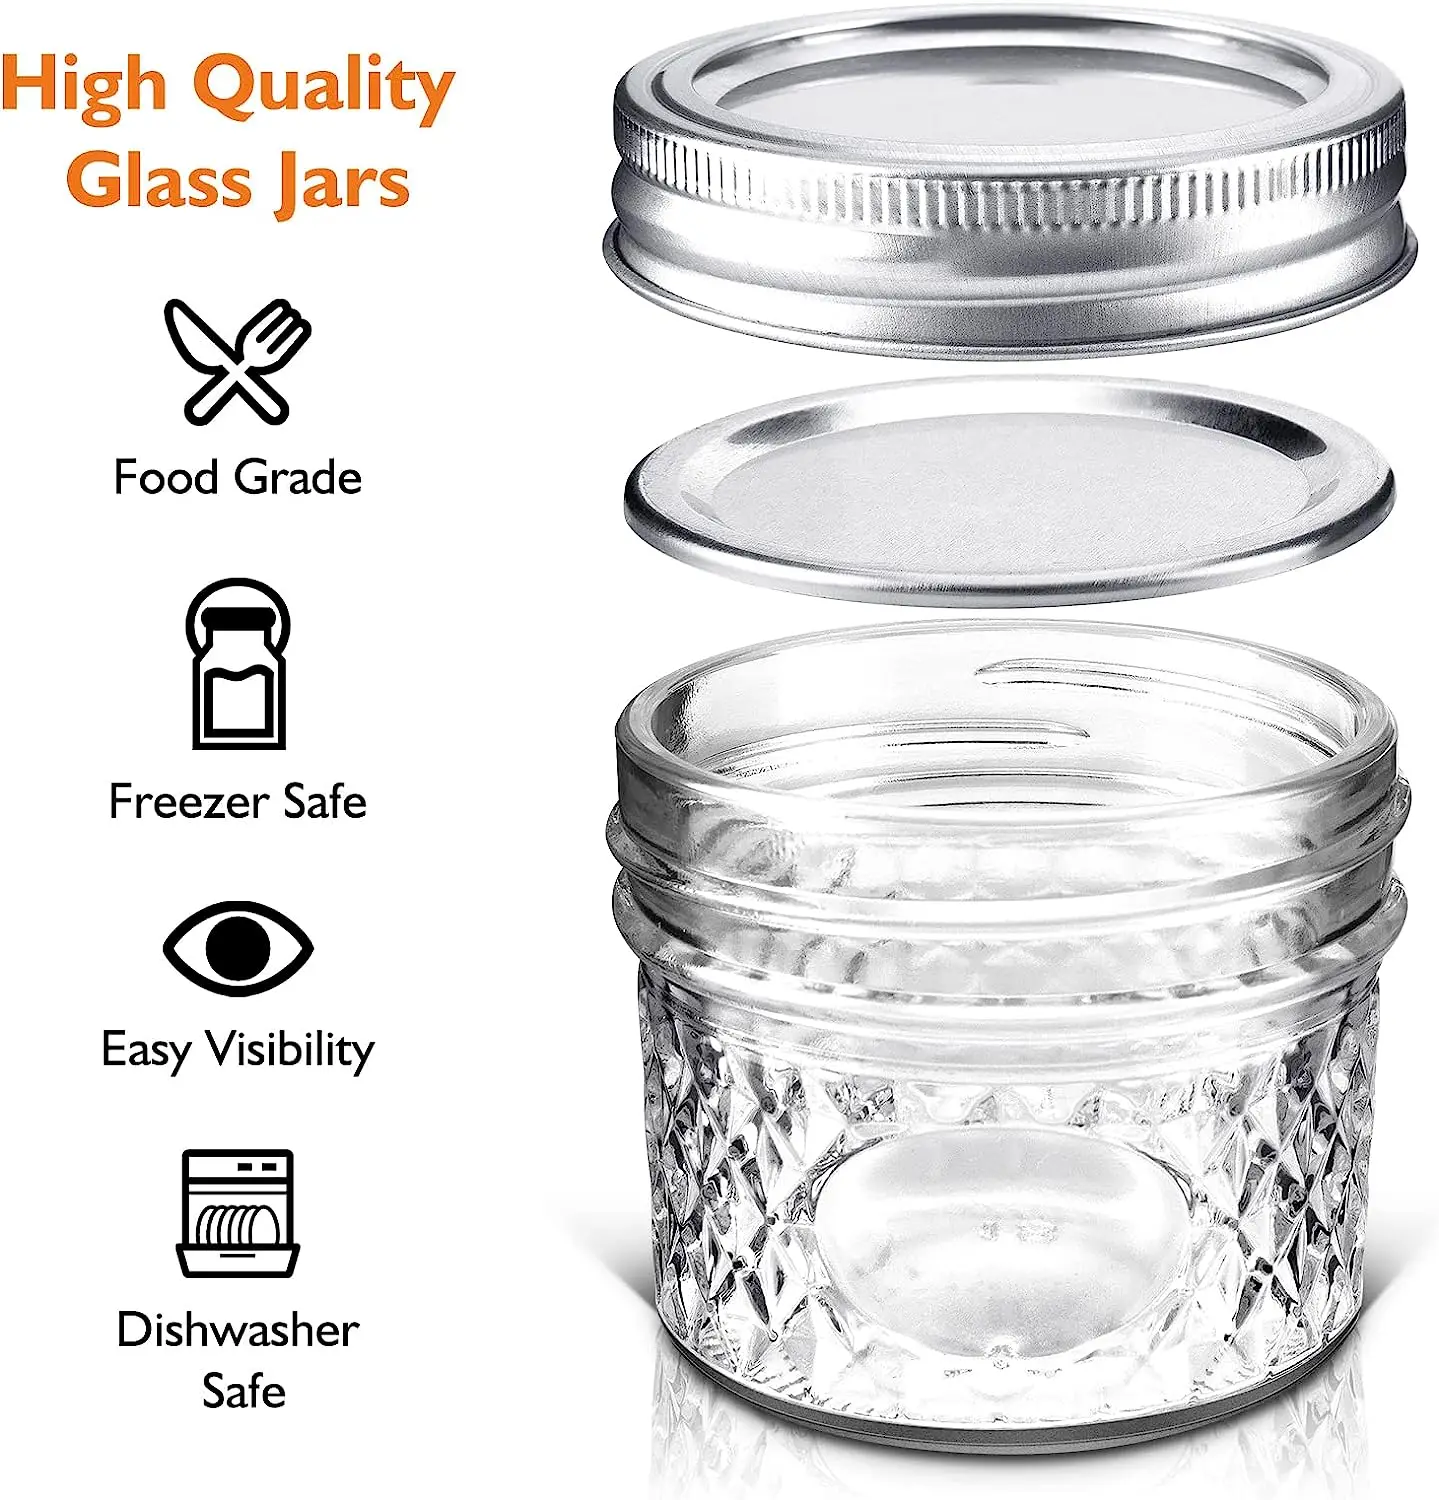 https://ae01.alicdn.com/kf/S6a7d9333a890421c929b4429b423c17bH/Mini-Canning-Jars-4-oz-With-Lids-Small-Glass-Jars-Ideal-for-Food-Storage-Jam-Spice.jpg